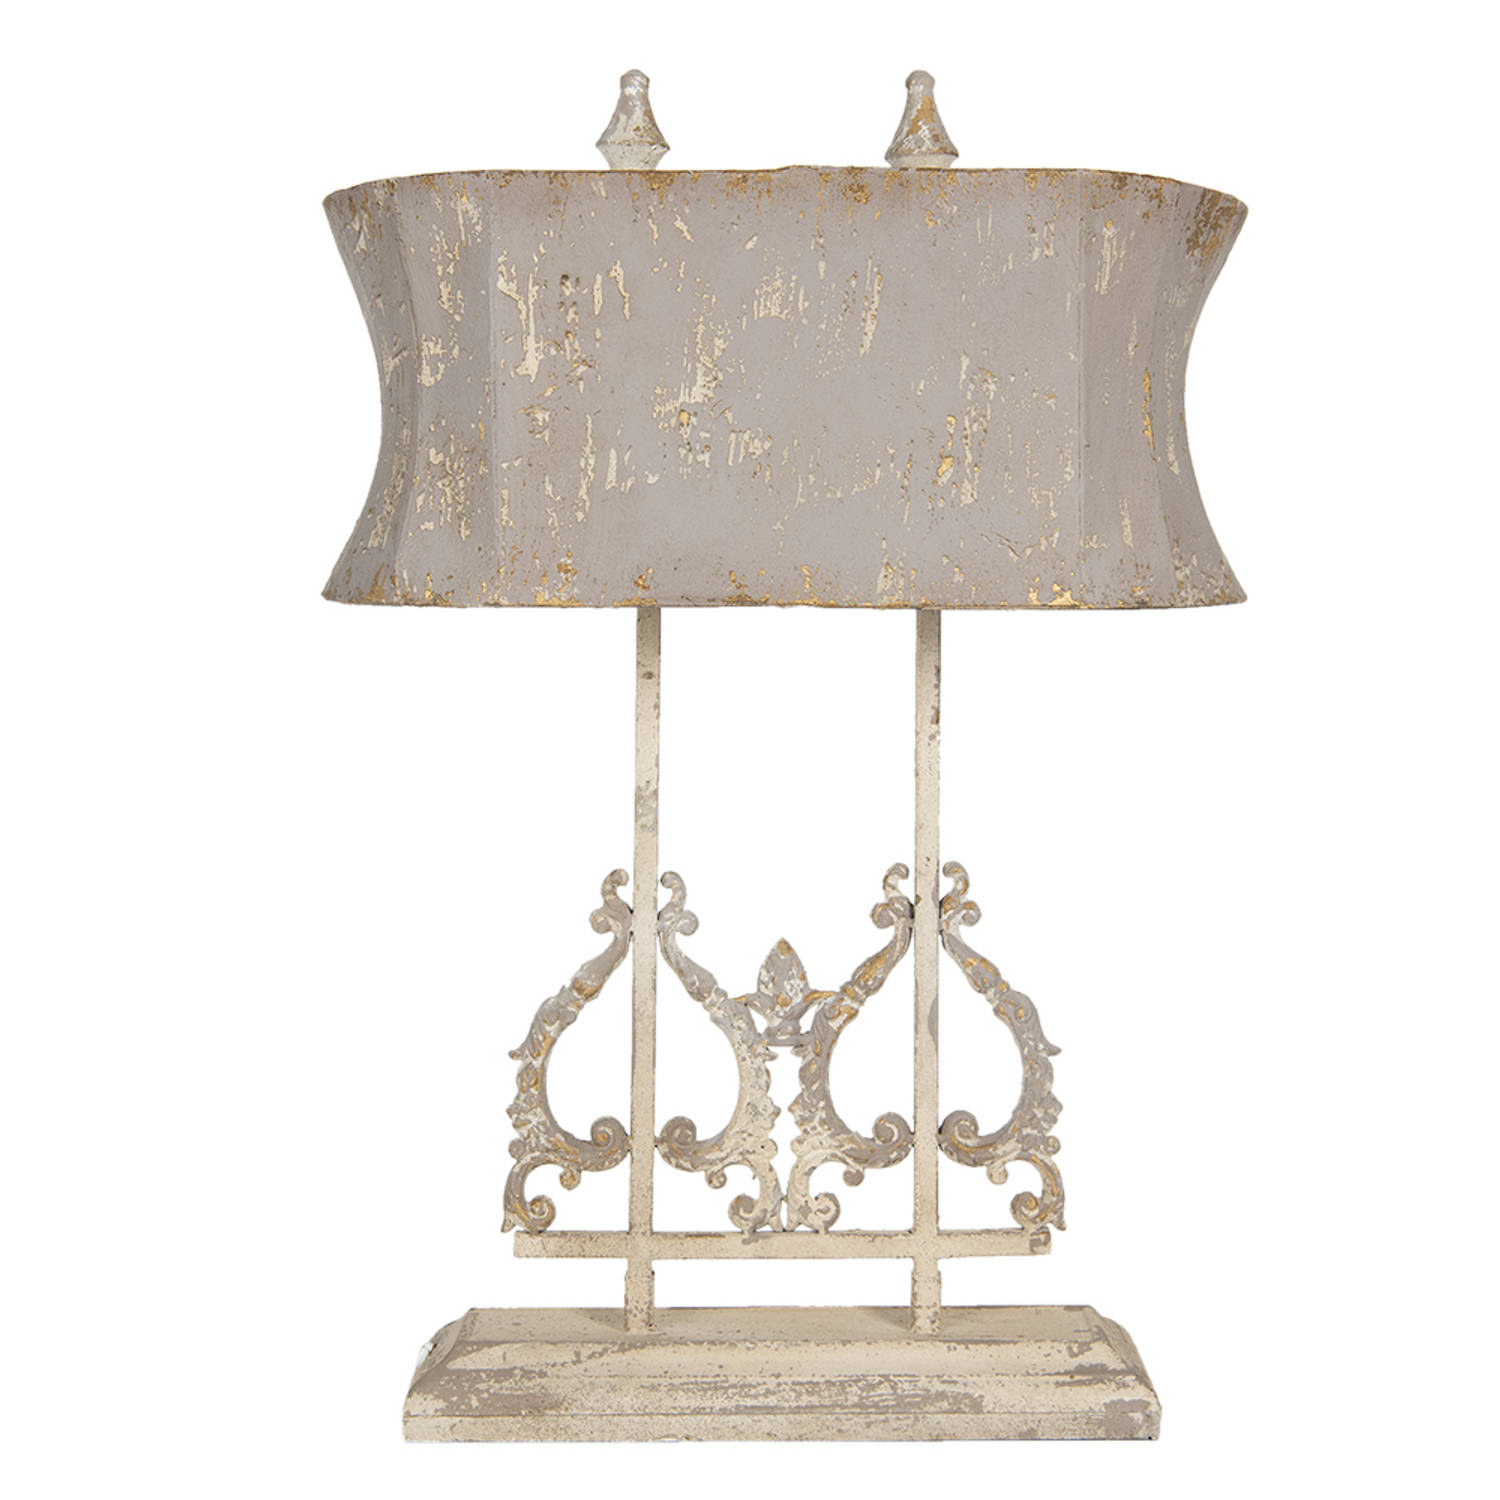 HAES DECO - Tafellamp - Shabby Chic -Vintage / Retro Lamp, formaat 50x25x74 cm - Bruin / Wit Metaal - Bureaulamp, Sfeerlamp